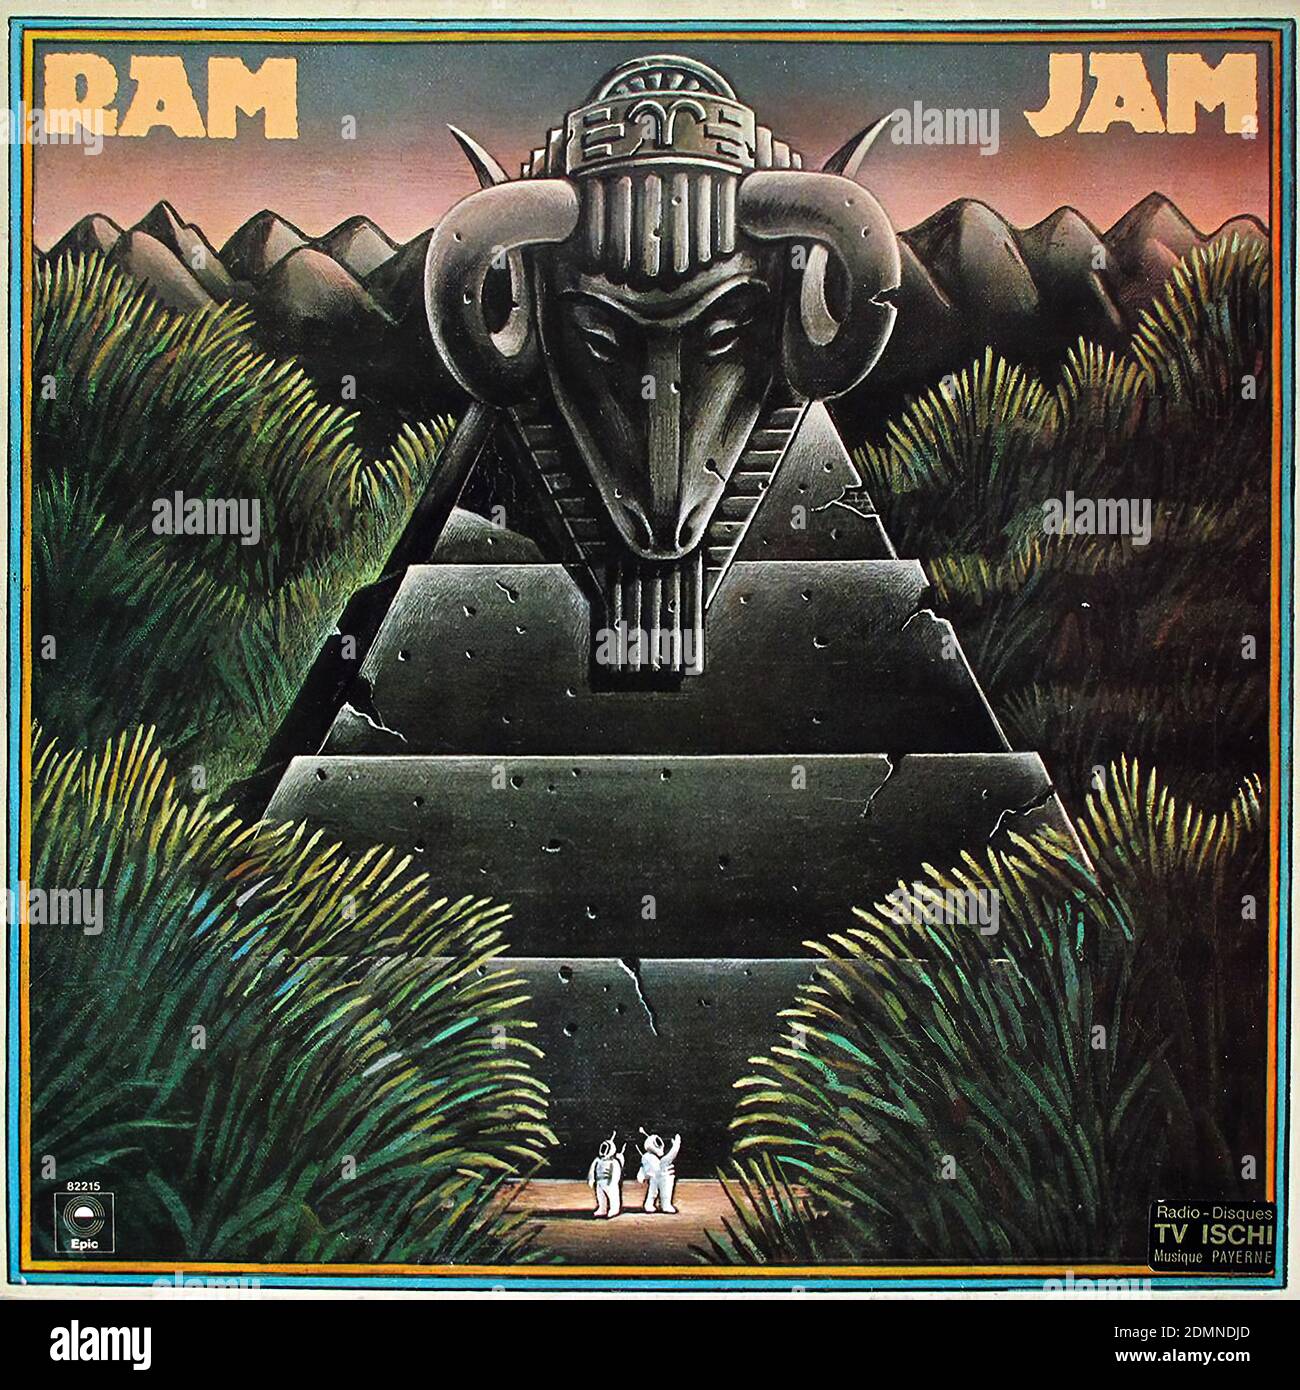 RAM SELF TITLED BLACK 12 LP - Vintage Record Cover Stock Photo - Alamy